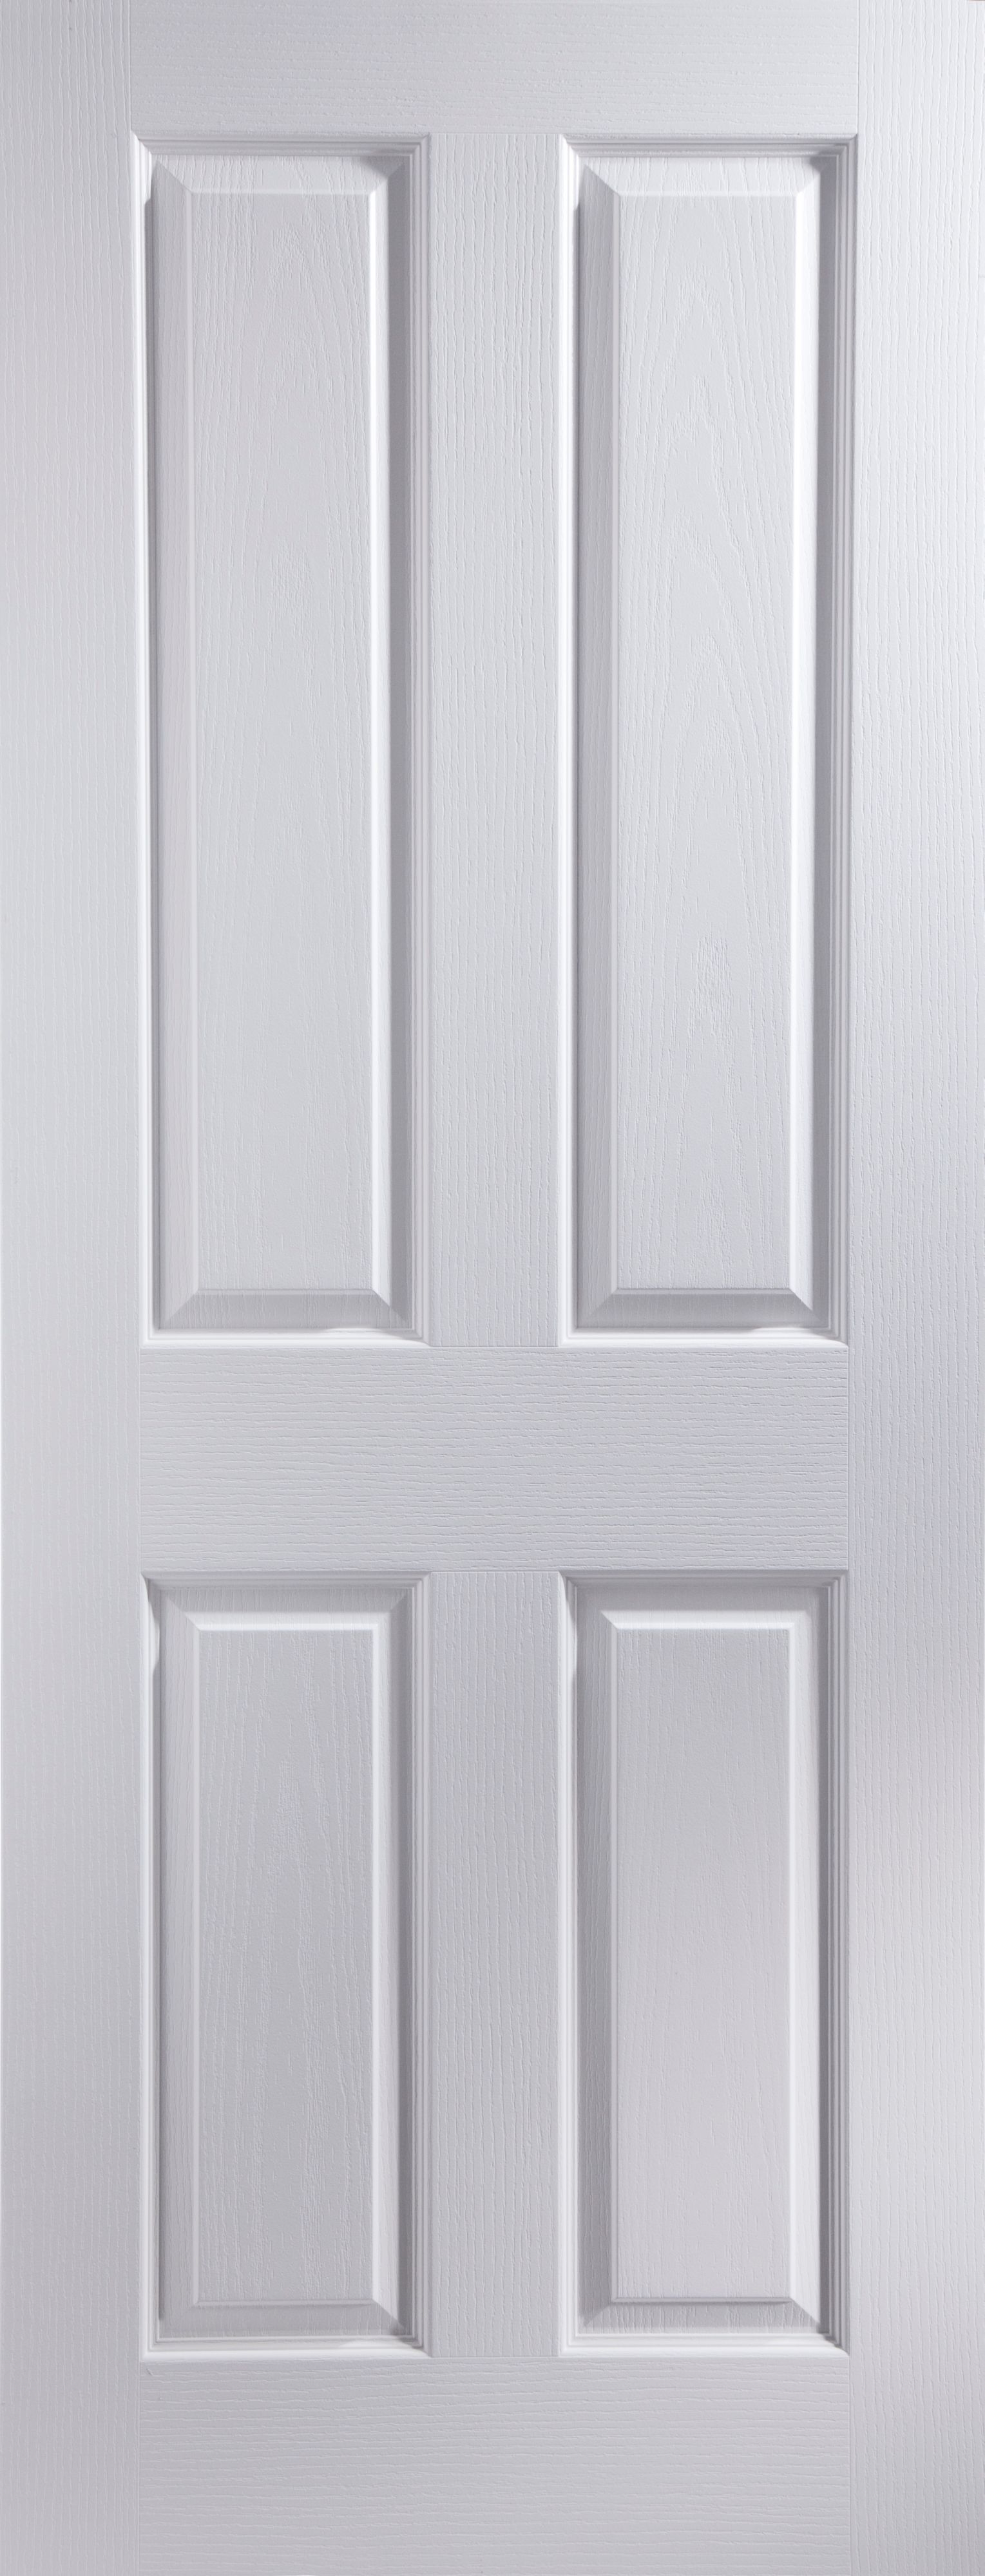 Geom 4 panel Unglazed Contemporary White Woodgrain effect Internal Fire door, (H)1981mm (W)686mm (T)44mm